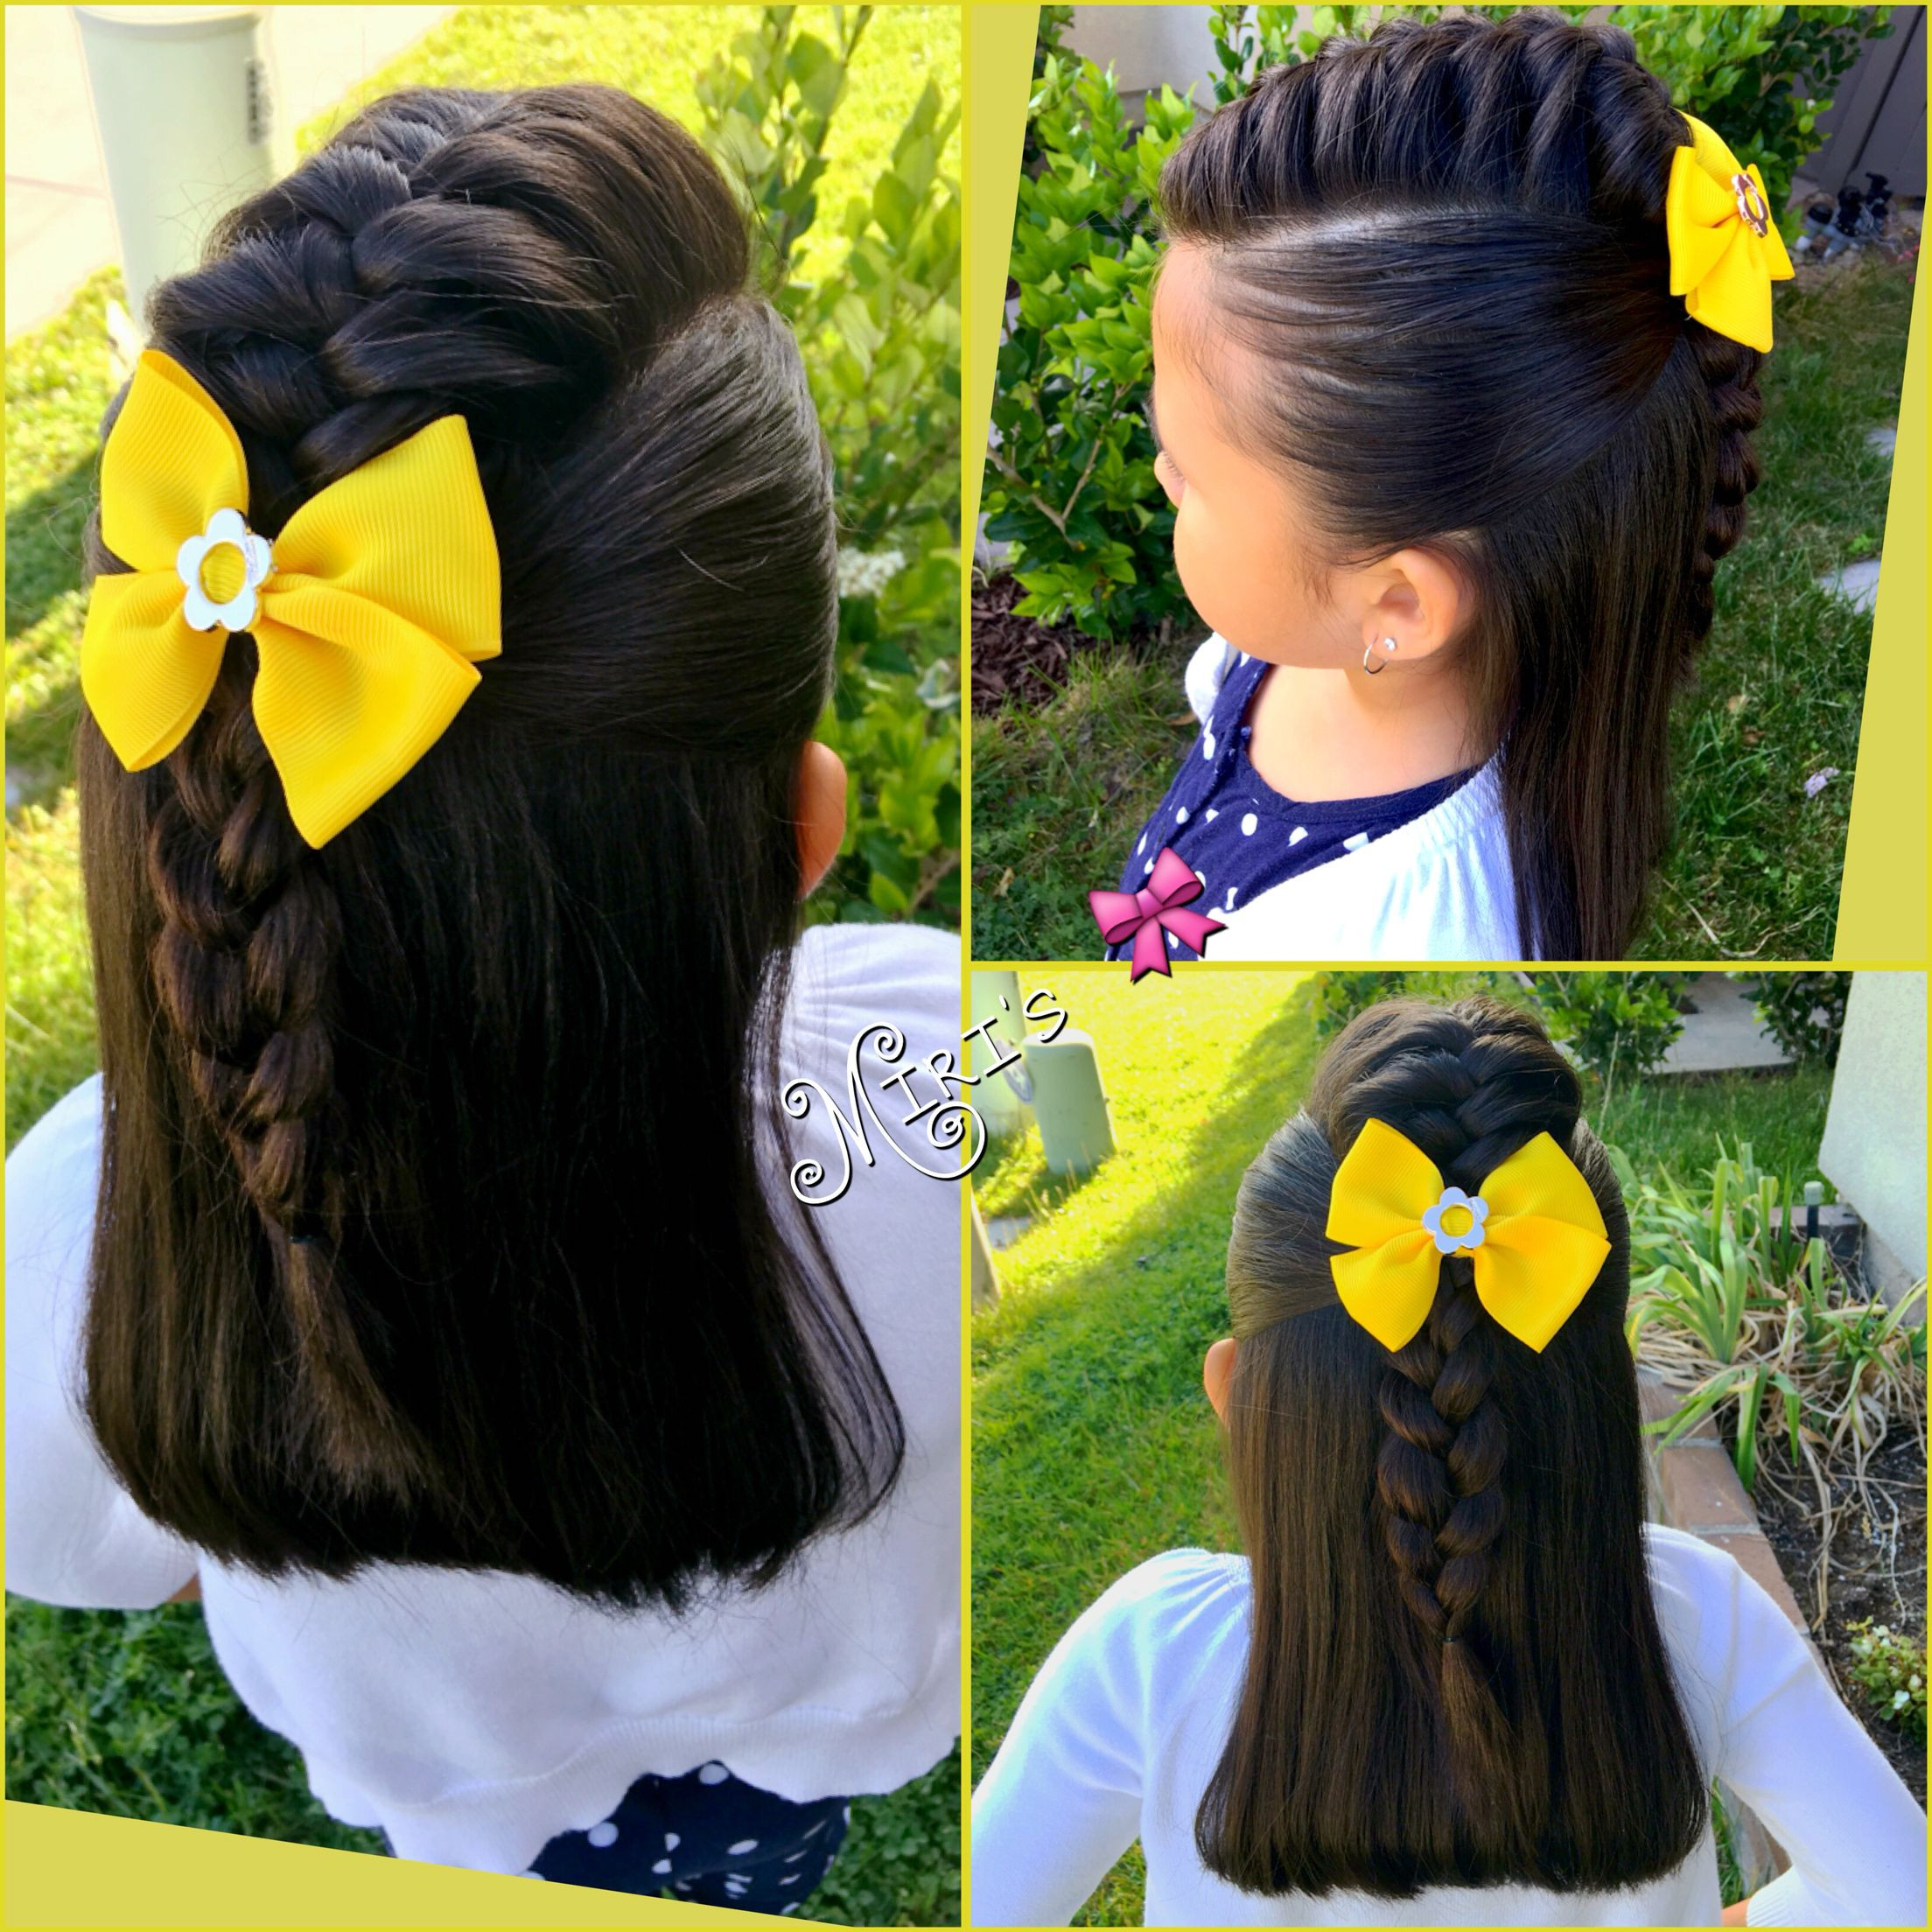 Mohawk Hairstyles For Little Girls
 Mohawk hair style for little girls